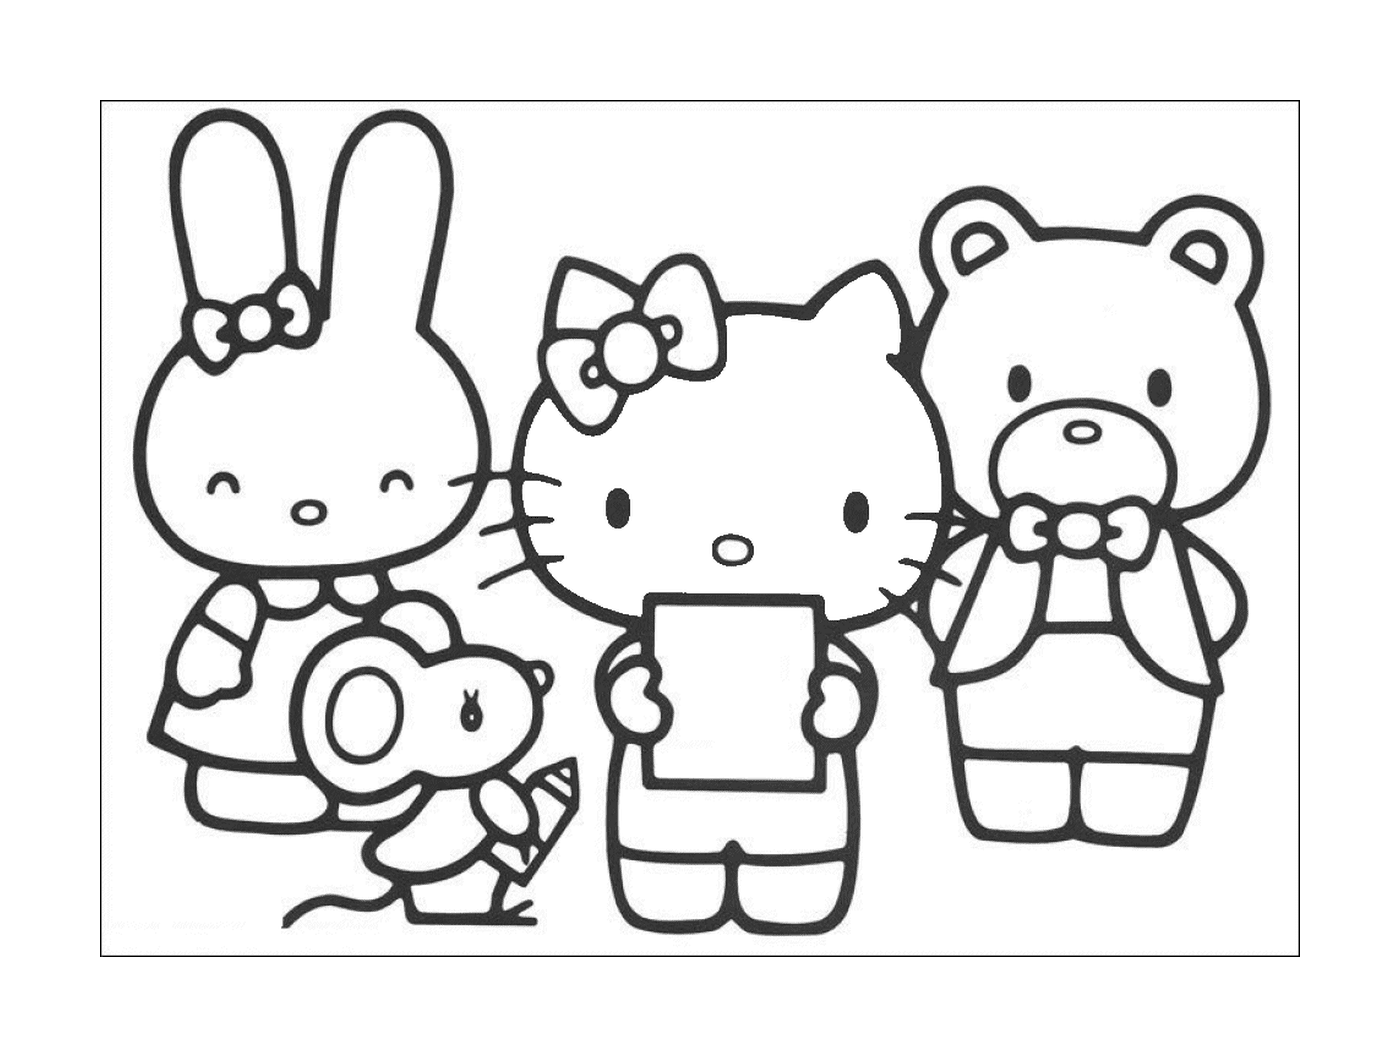   Un groupe d'amis Hello Kitty 